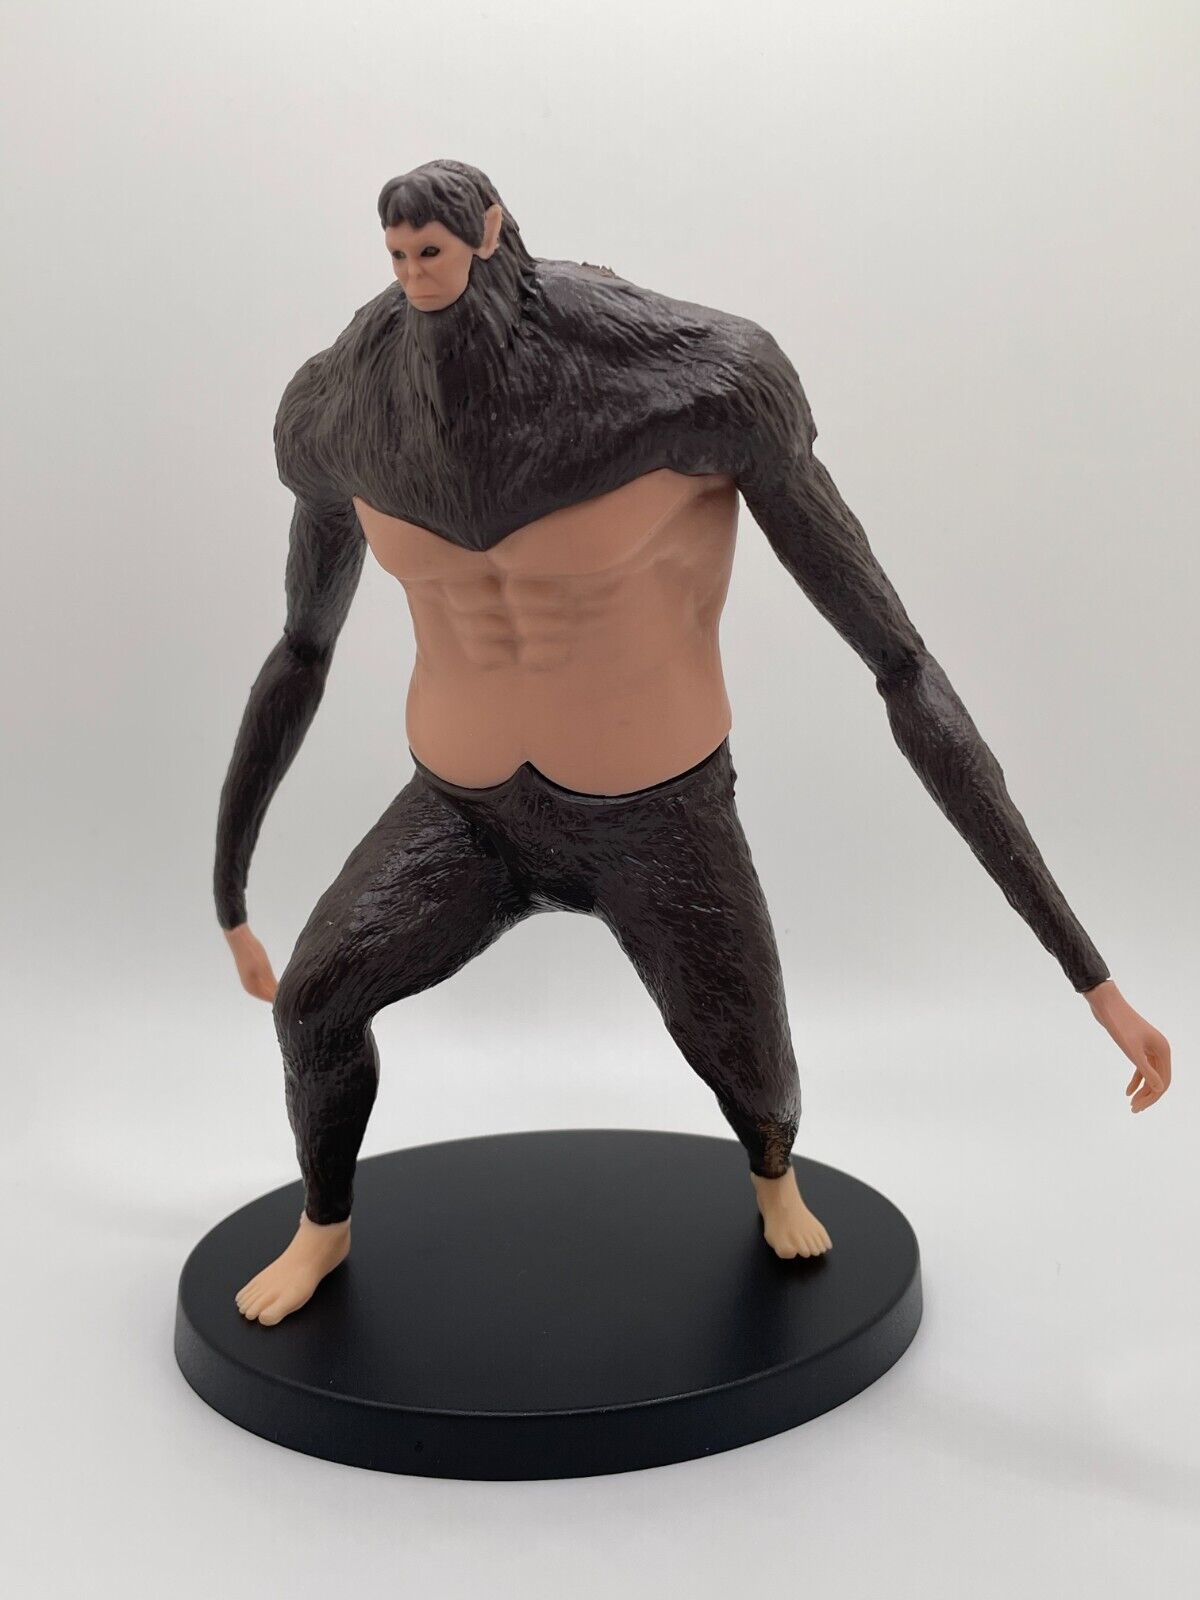 Beast Titan Model Classic Anime Figure Model PVC Model 16.5 Cm High Handmade Mod